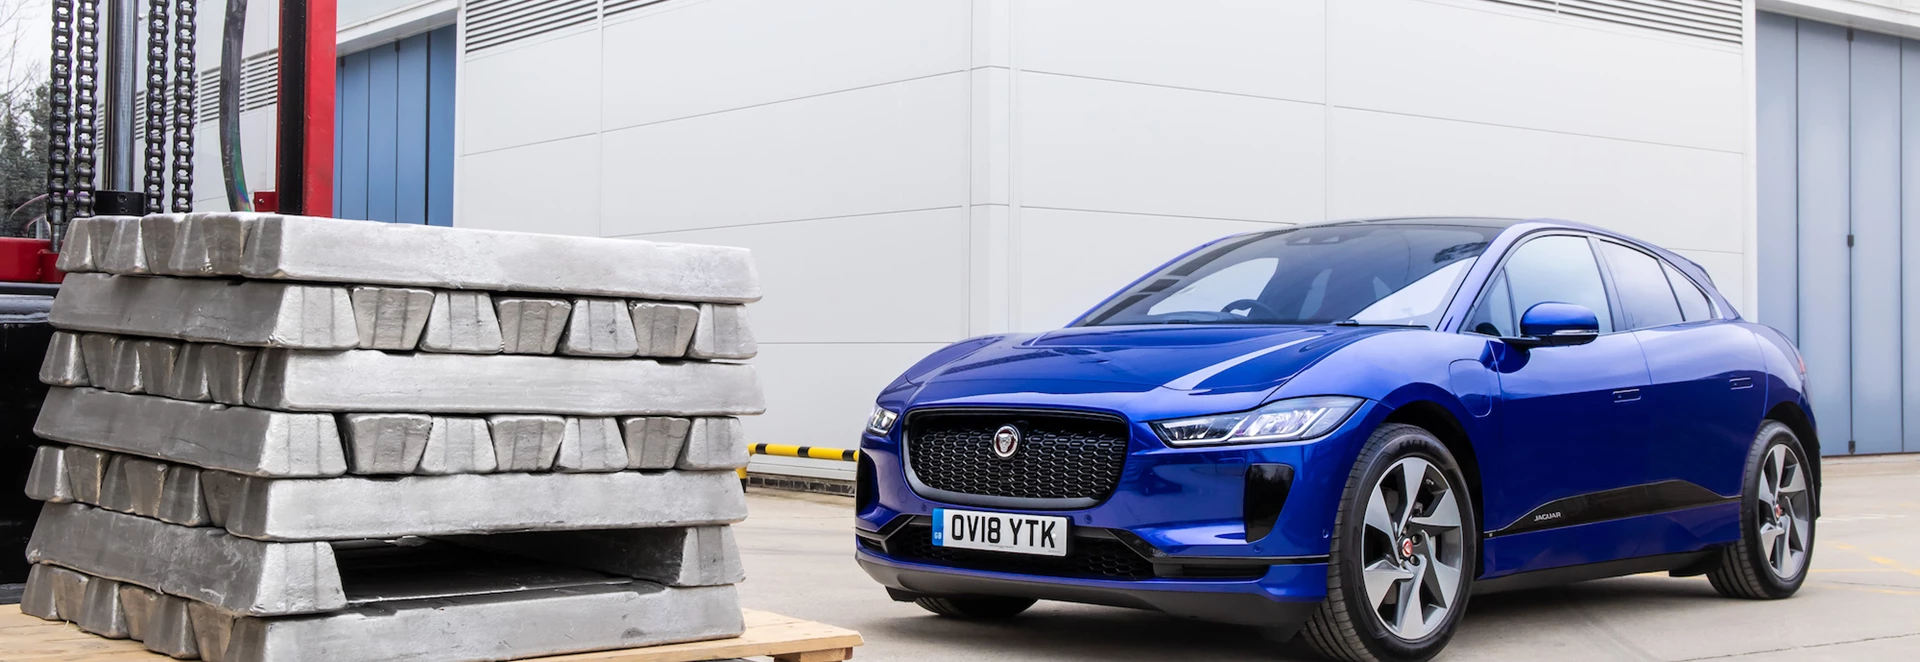 Jaguar Land Rover launches new aluminium recycling project